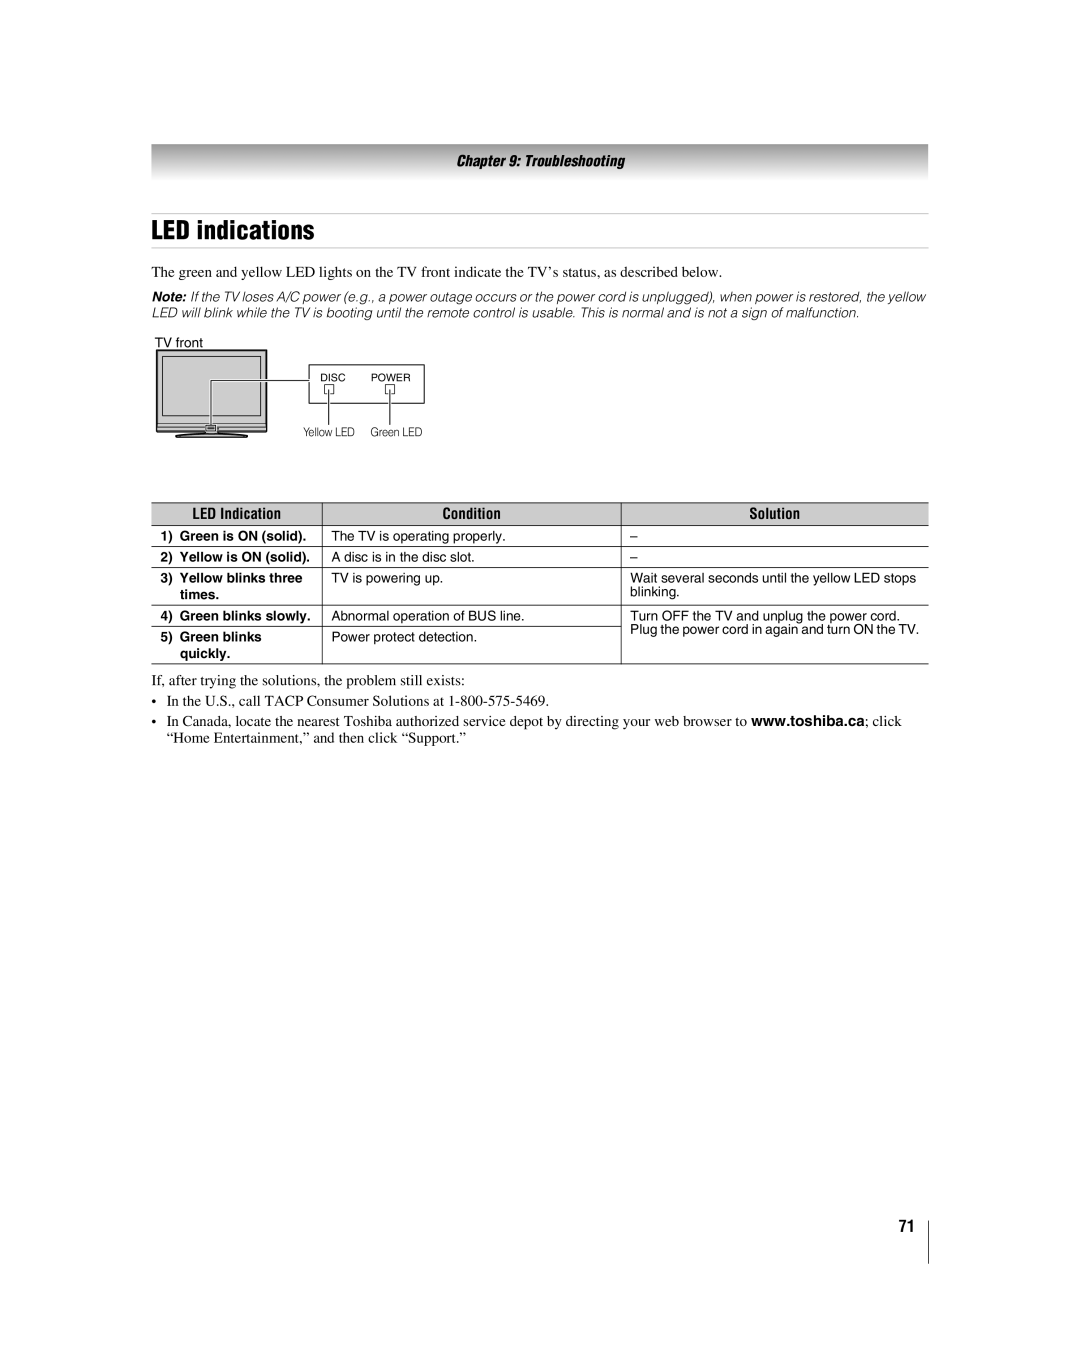 Toshiba 26LV67, 32LV67U manual LED indications, LED Indication, Condition, Solution, Troubleshooting 